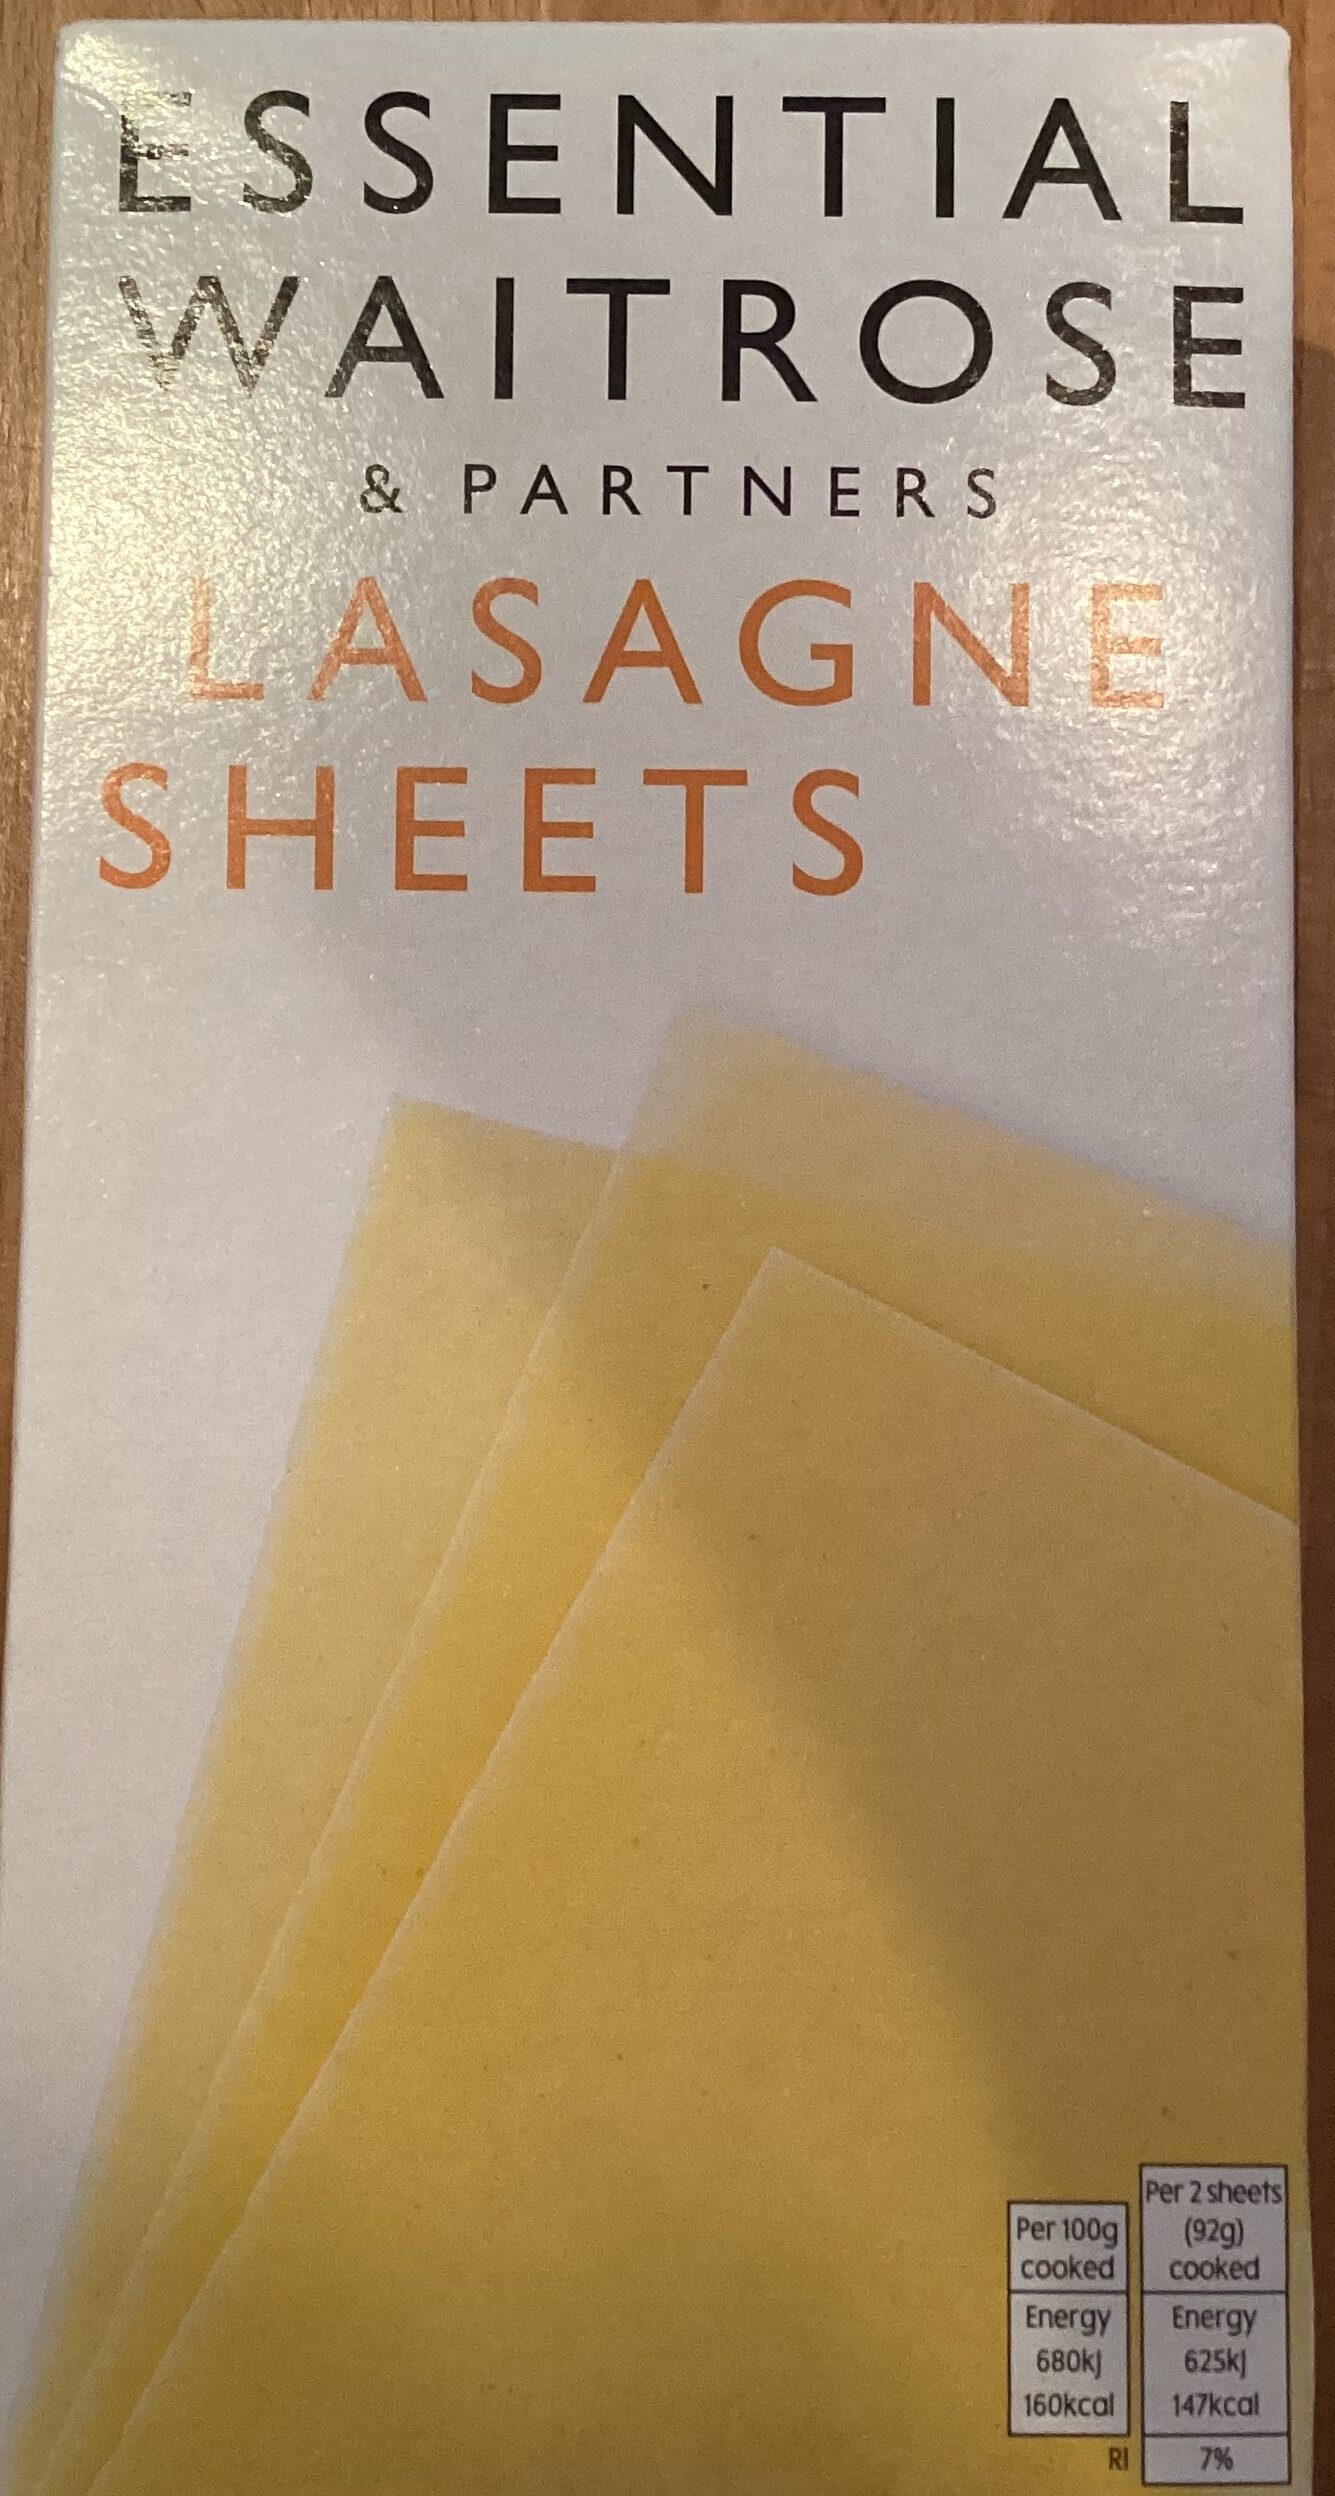 Lasagne sheets - Product